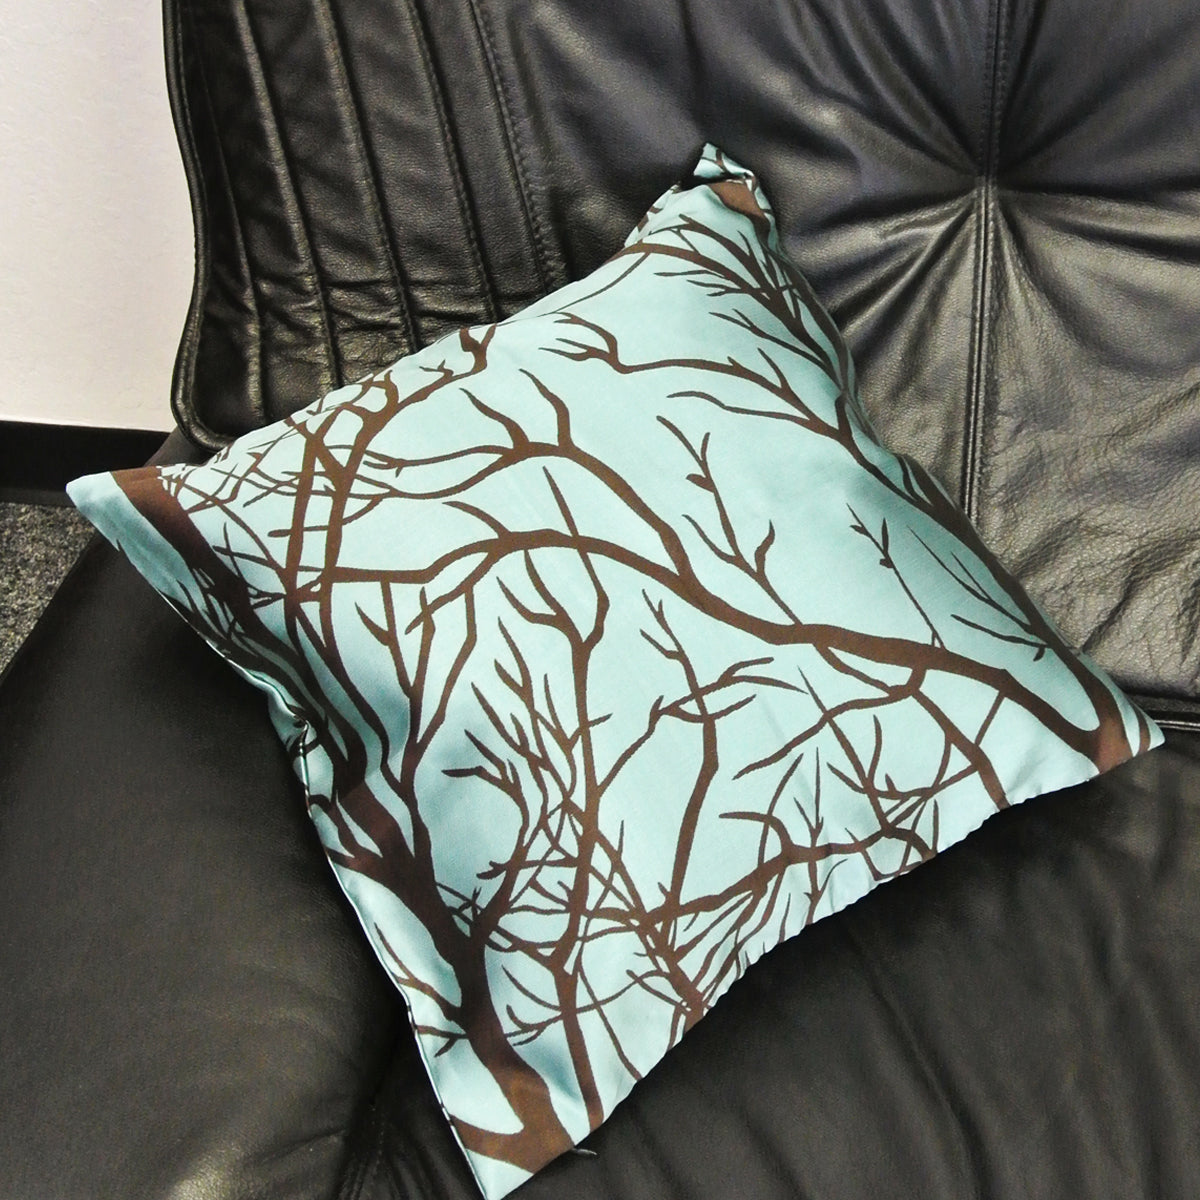 Kella Milla Contemporary Woodlands Throw Pillow Cover